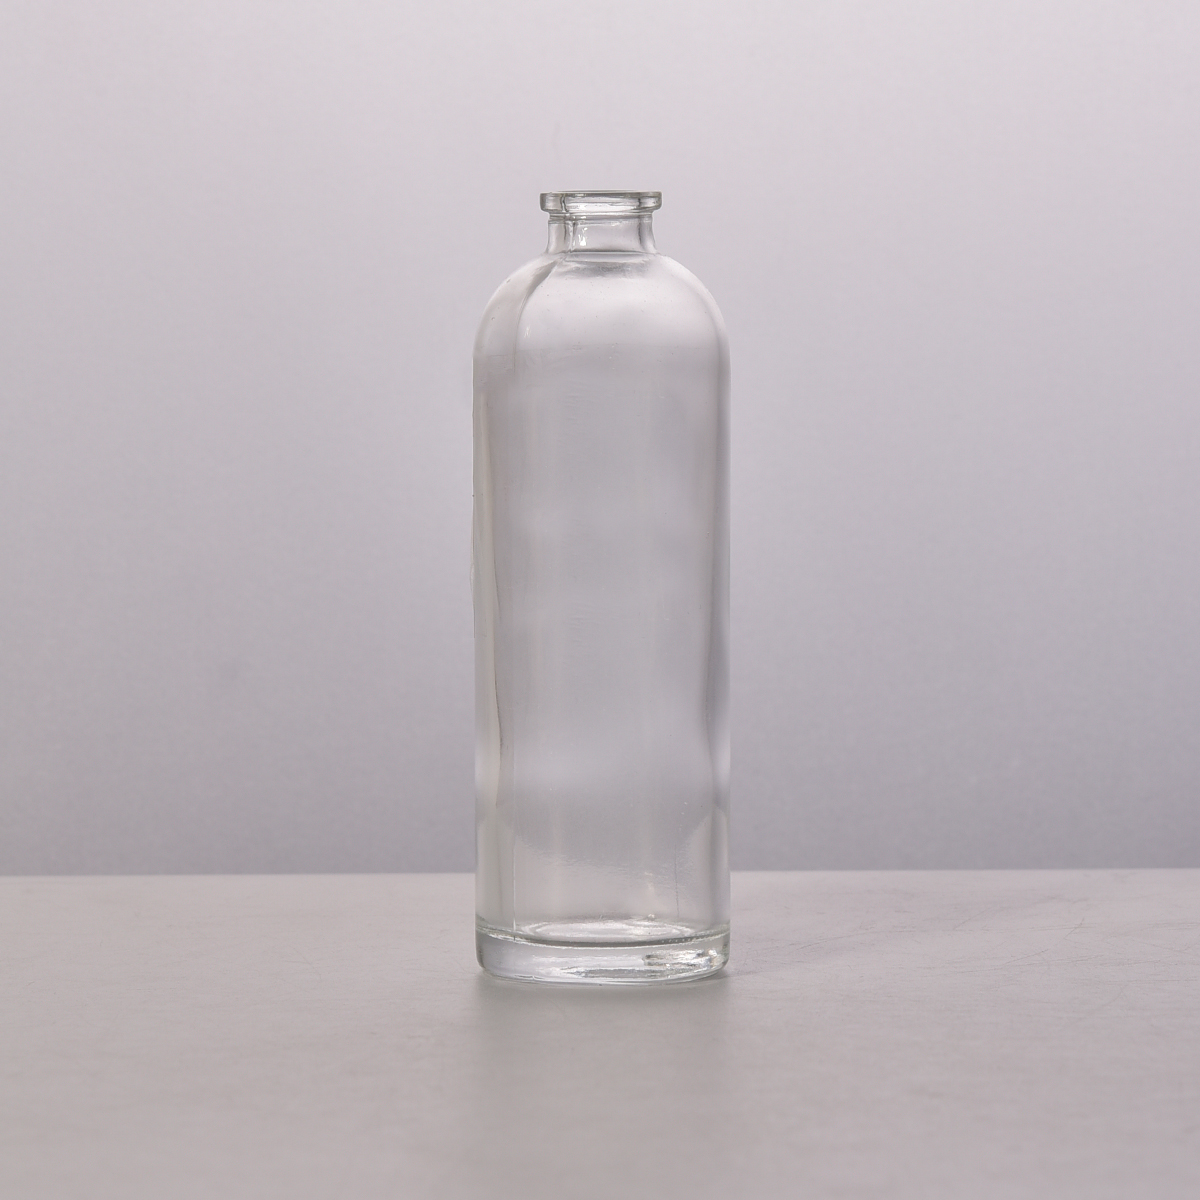 Botol minyak wangi silinder 100ml dengan semburan dan topi